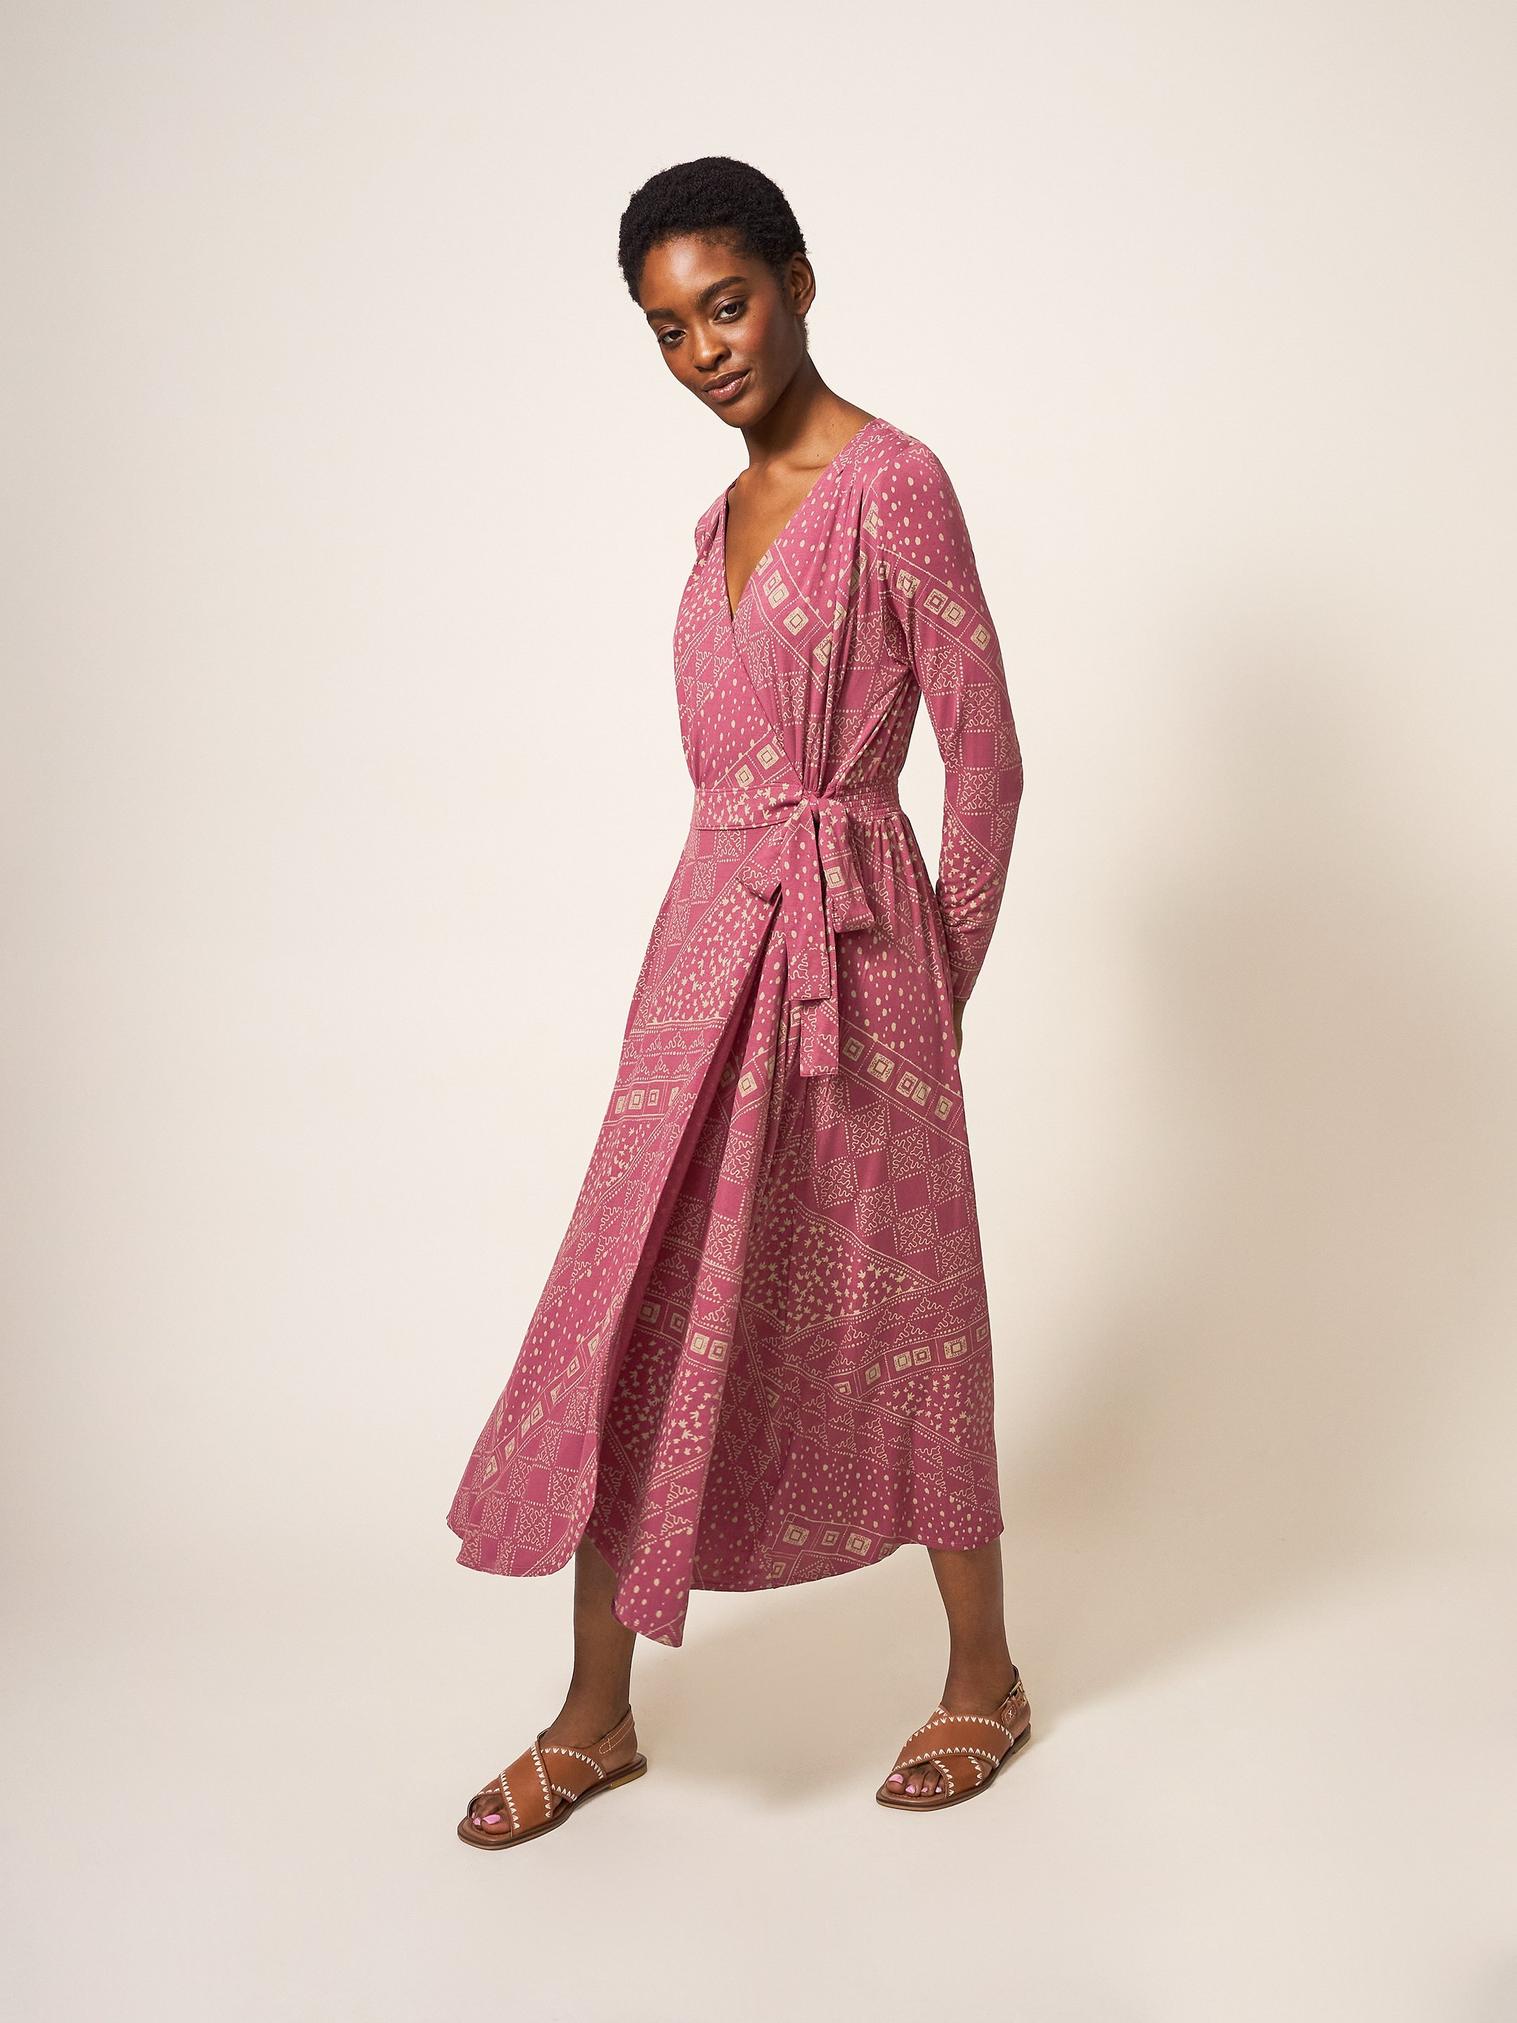 Rose Eco Vero Wrap Dress in PLUM MLT - LIFESTYLE